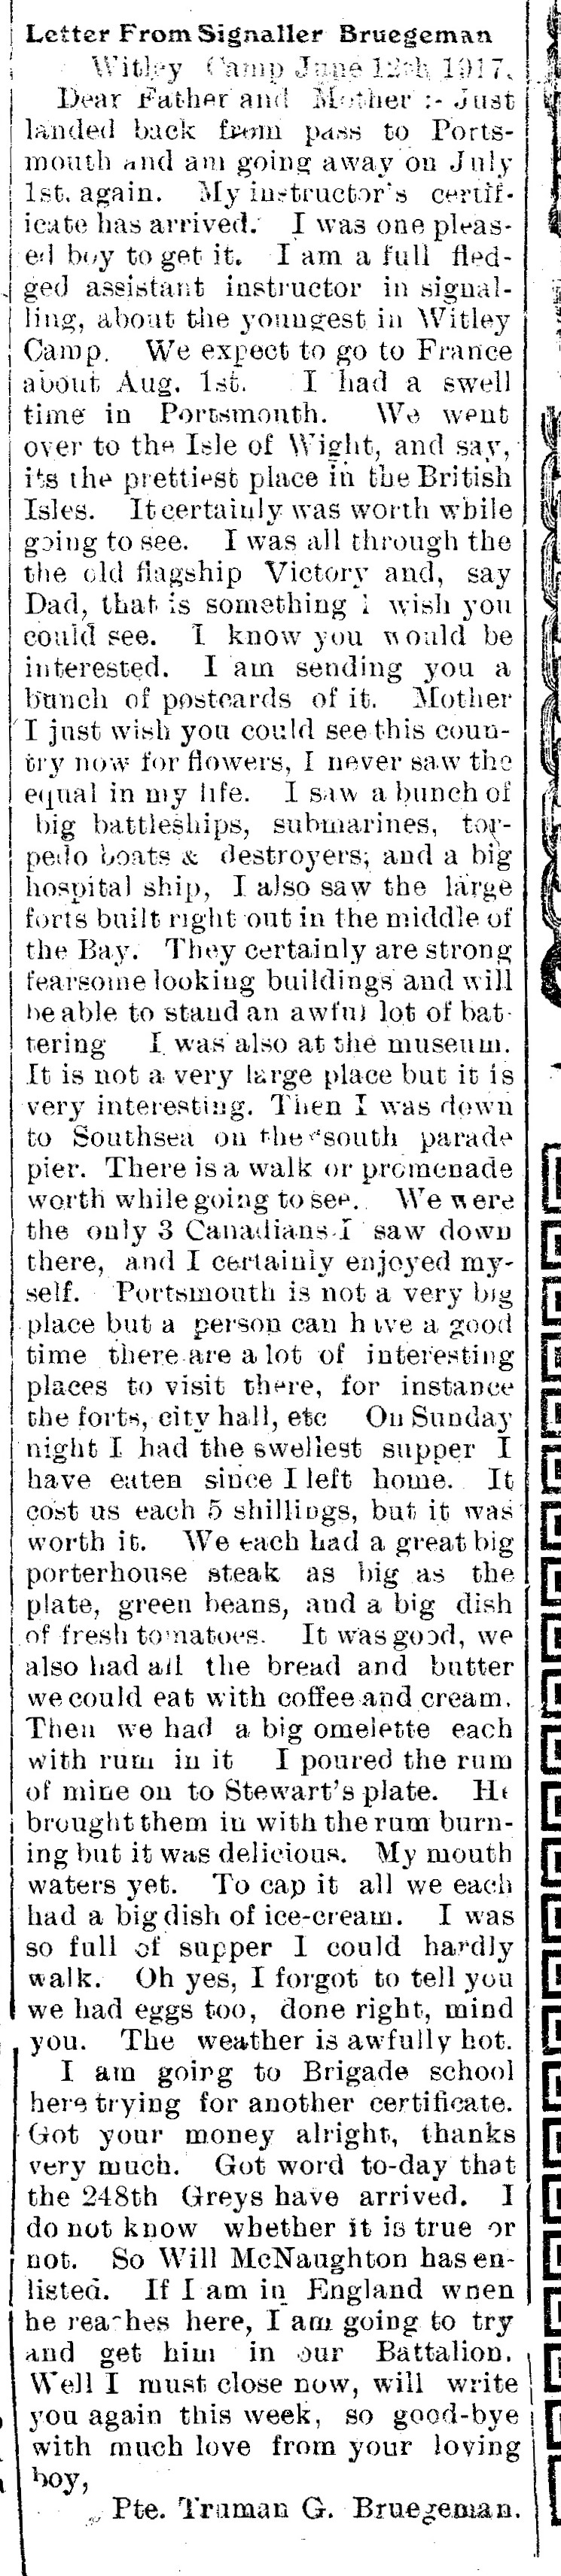 Chesley Enterprise, July 26, 1917